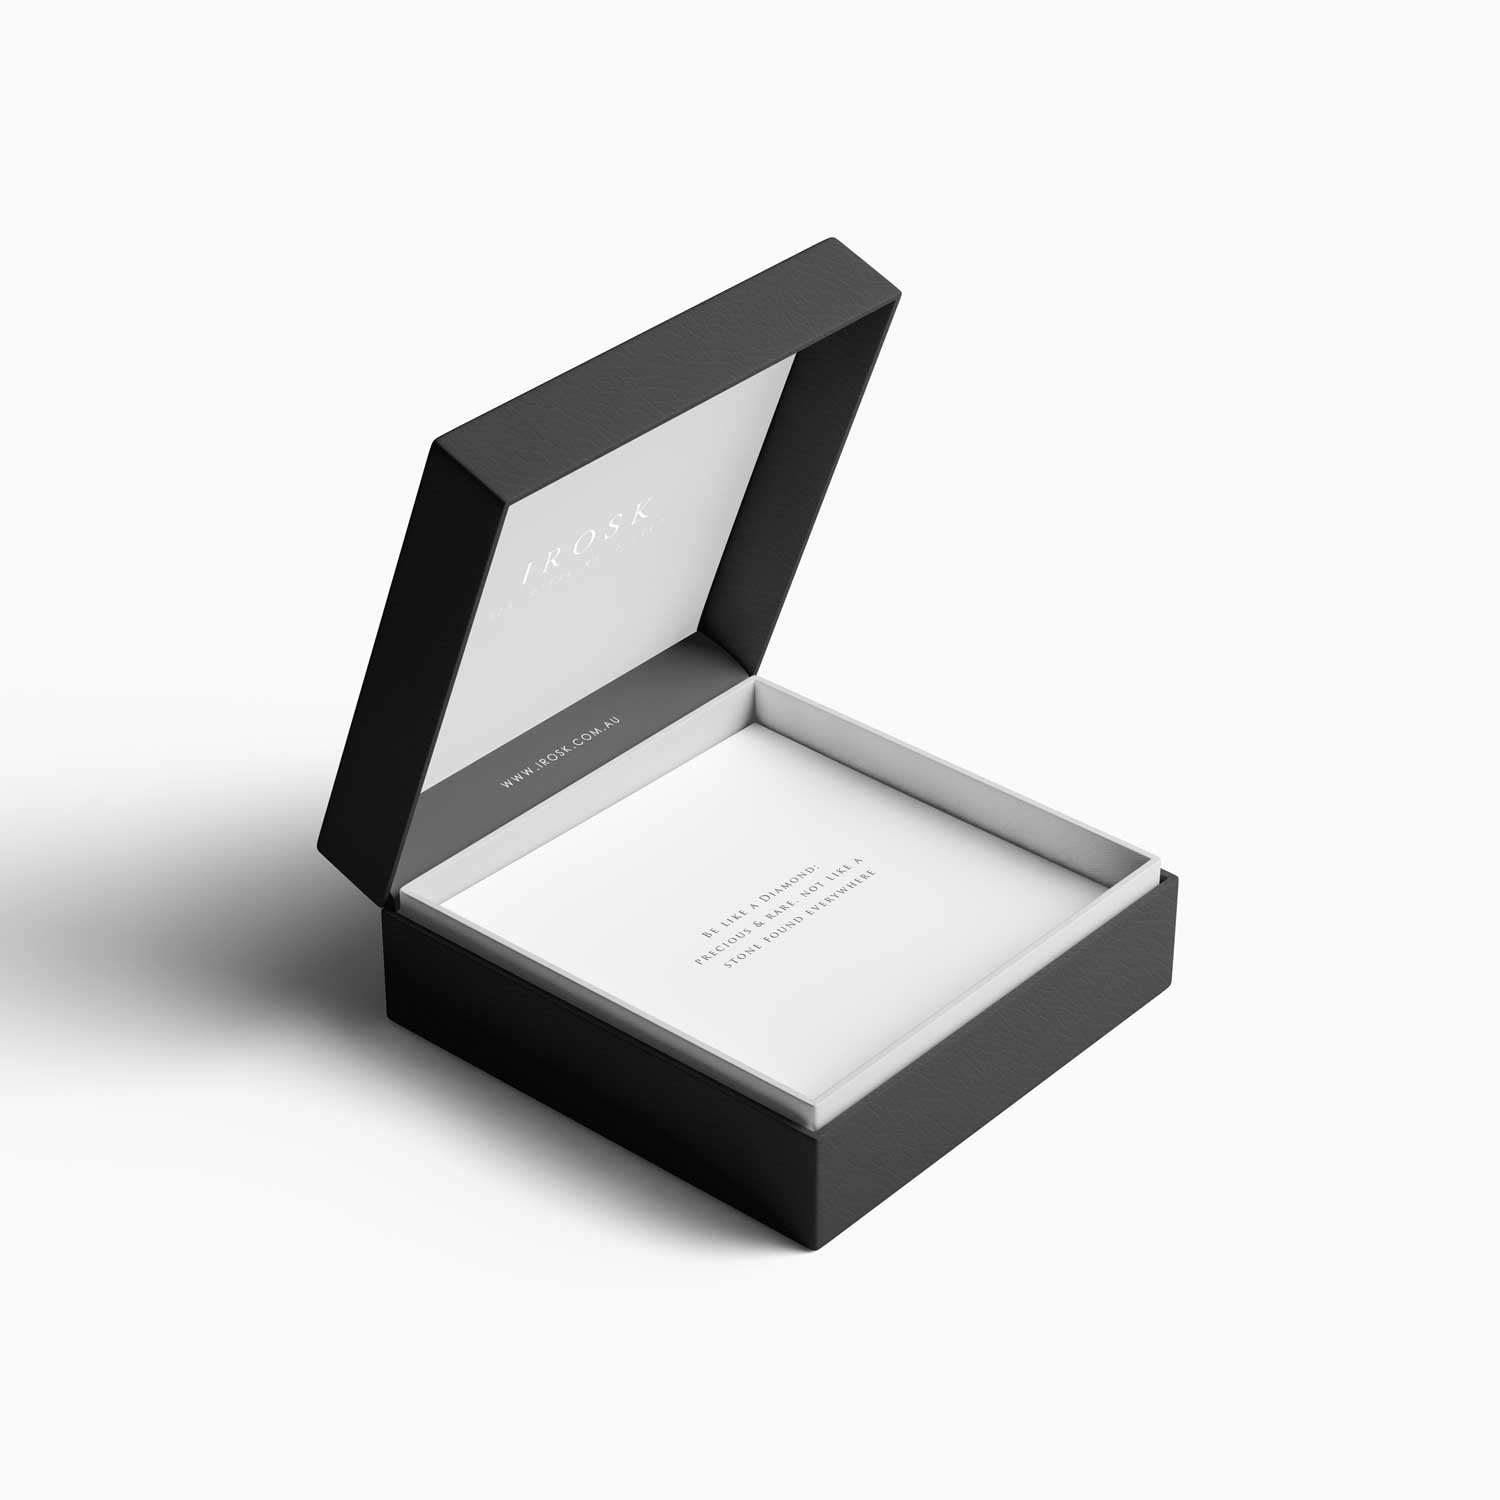 irosk jewellery box for added luxury